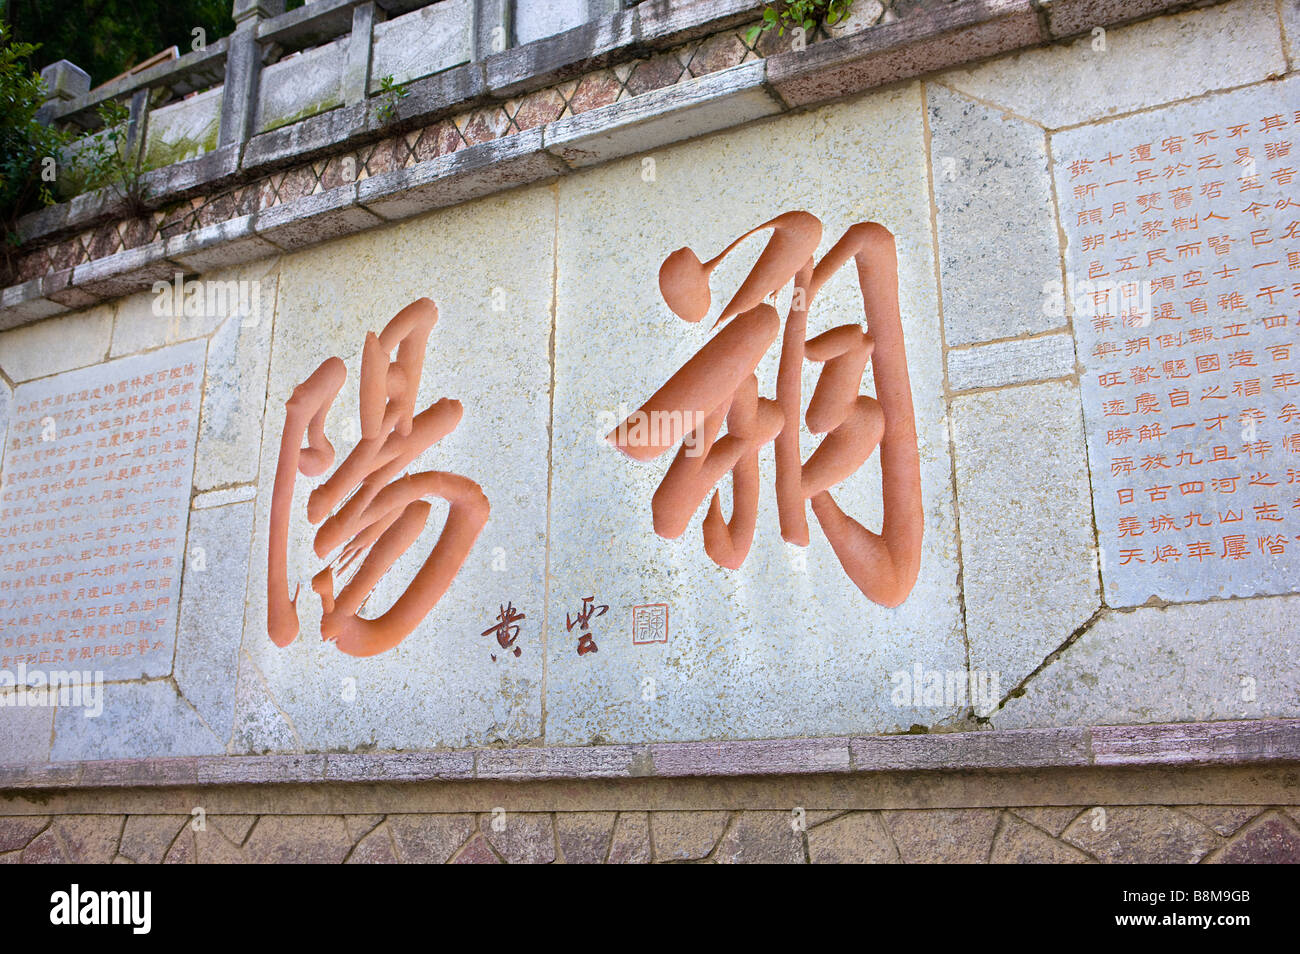 La Cina della provincia di Guangxi Guilin, Yangshuo scultura in pietra di calligrafia cinese Foto Stock